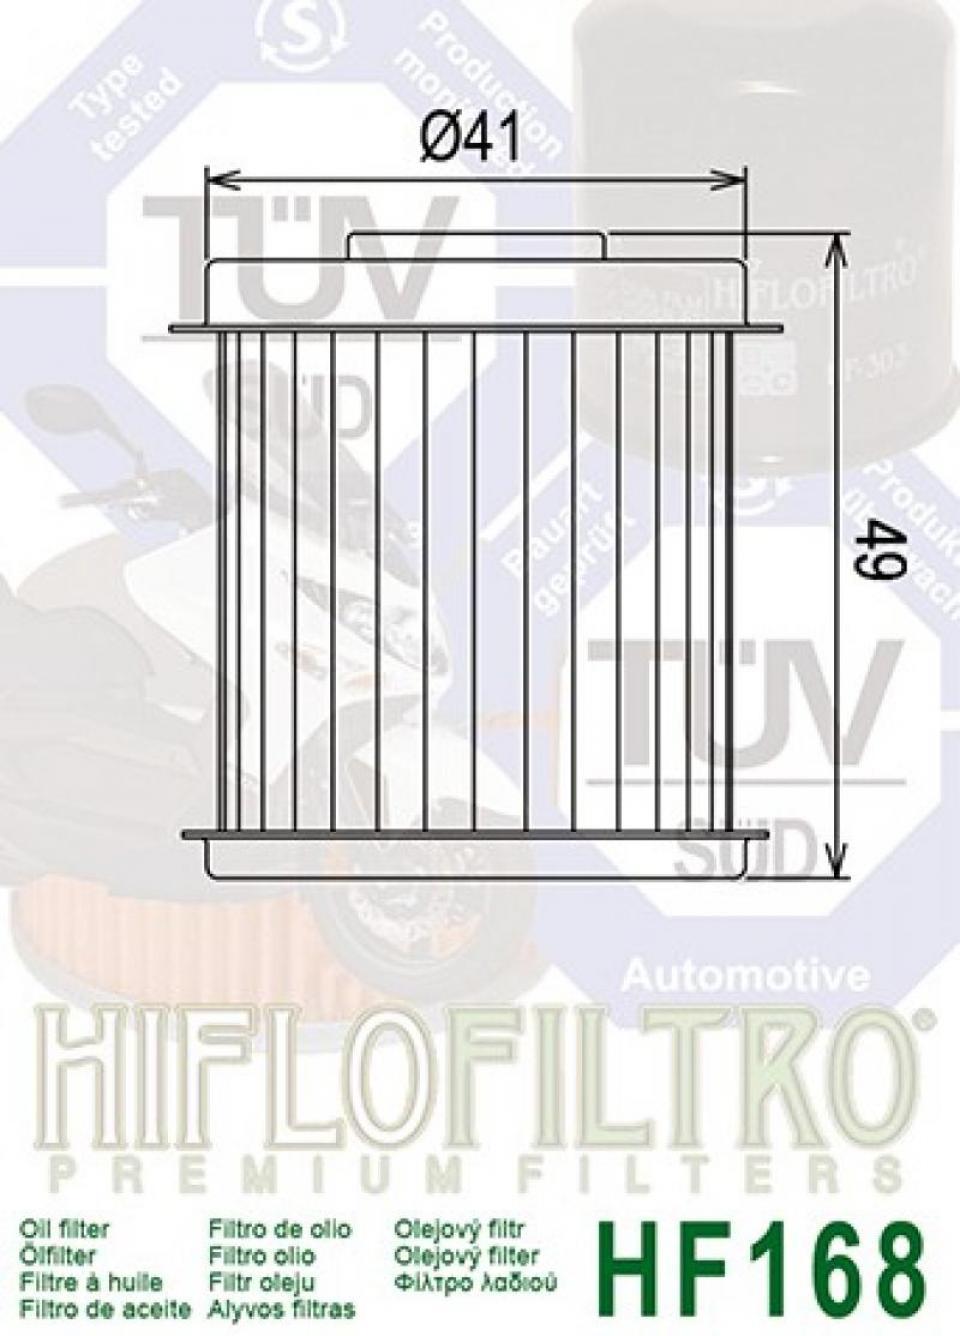 Filtre à huile Hiflofiltro pour scooter HF168 Neuf